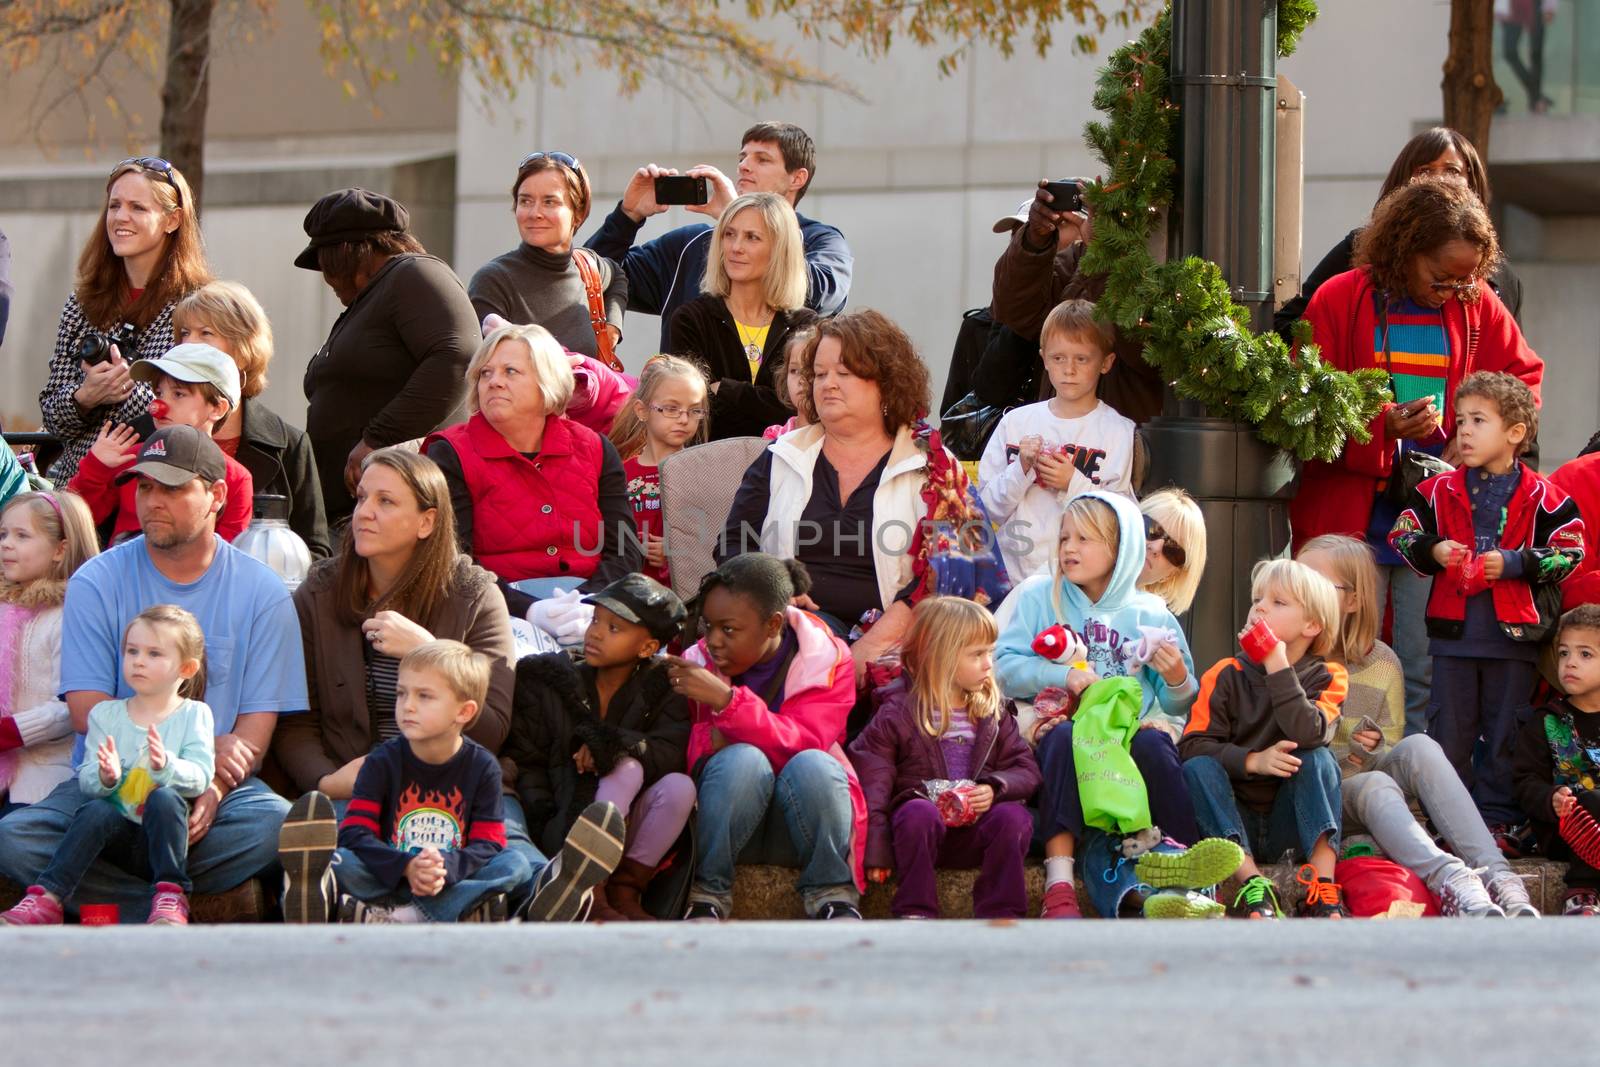 Spectators Look On In Anticipation At Atlanta Christmas Parade by BluIz60